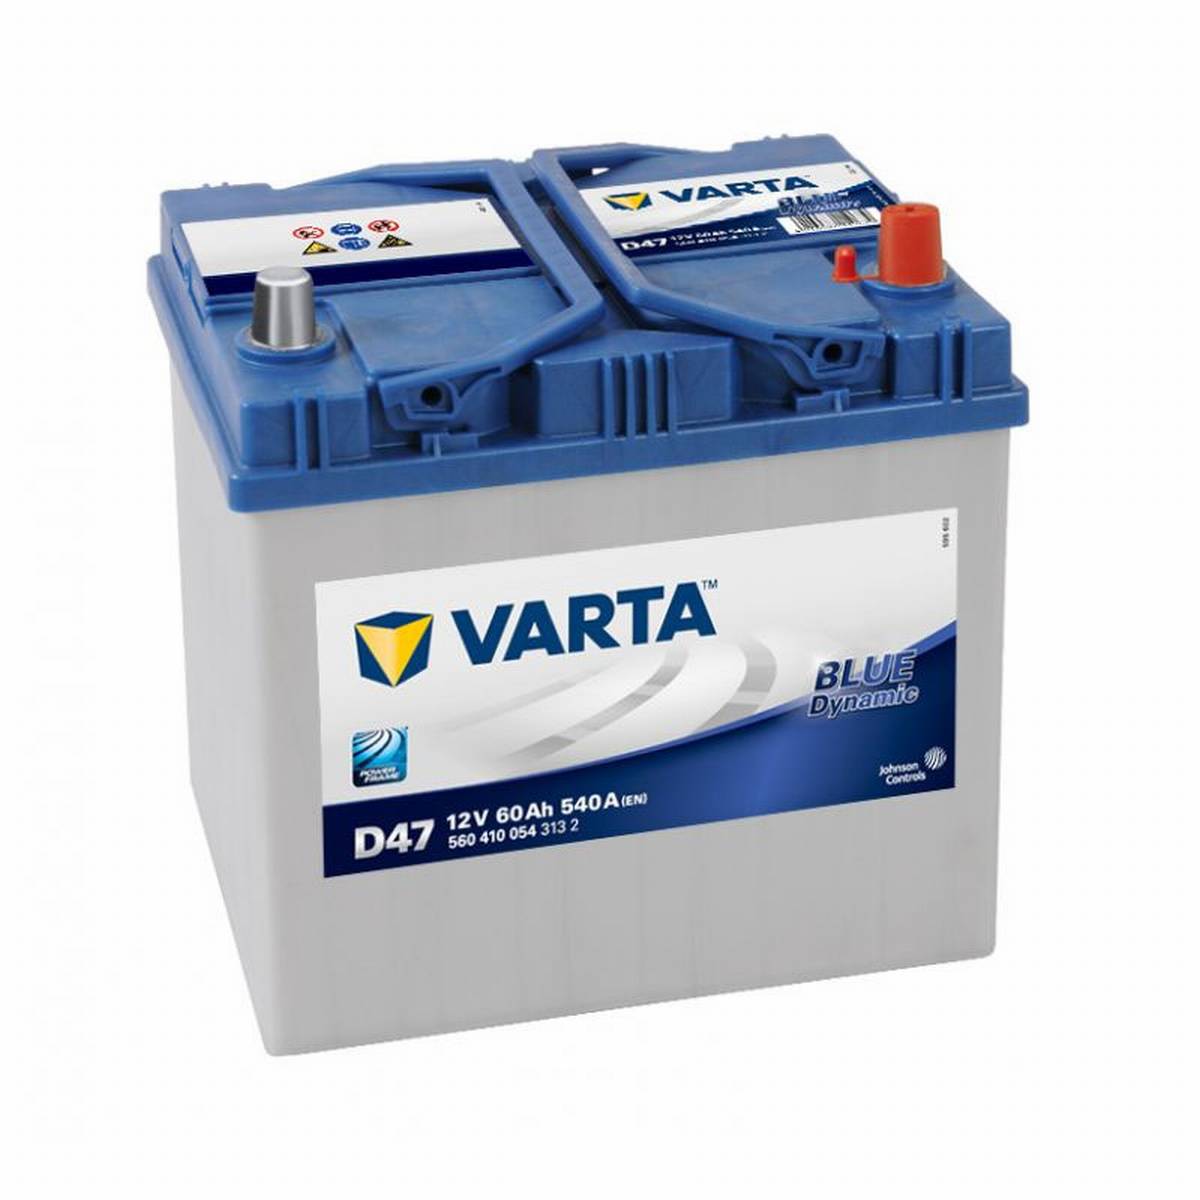 VARTA D47 Blue Dynamic 12V 60Ah 540A Autobatterie 560 410 054